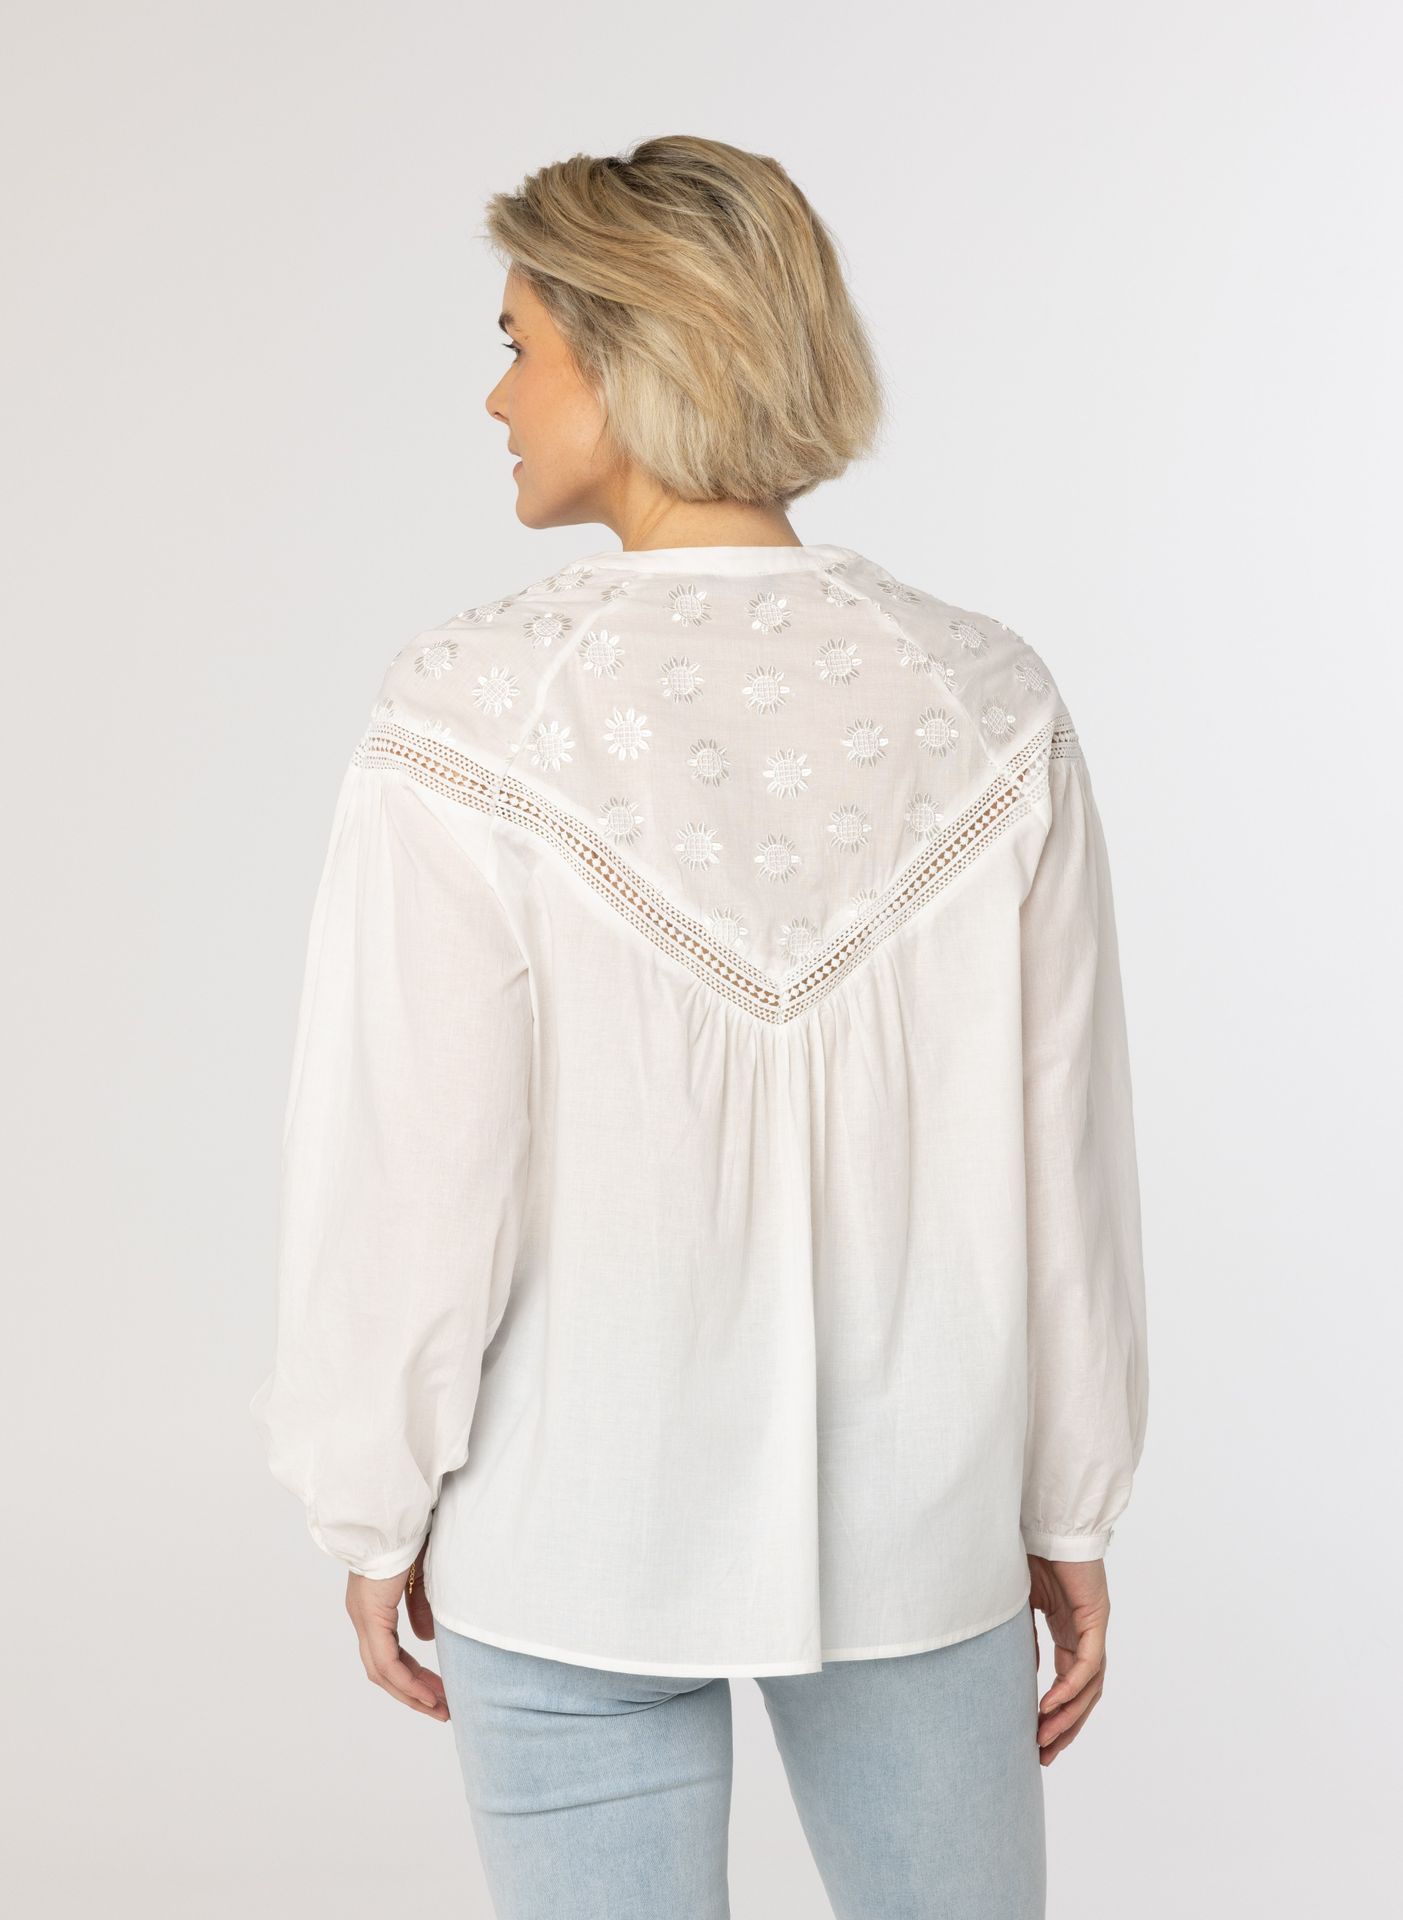 Norah Off white blouse off-white 214235-101